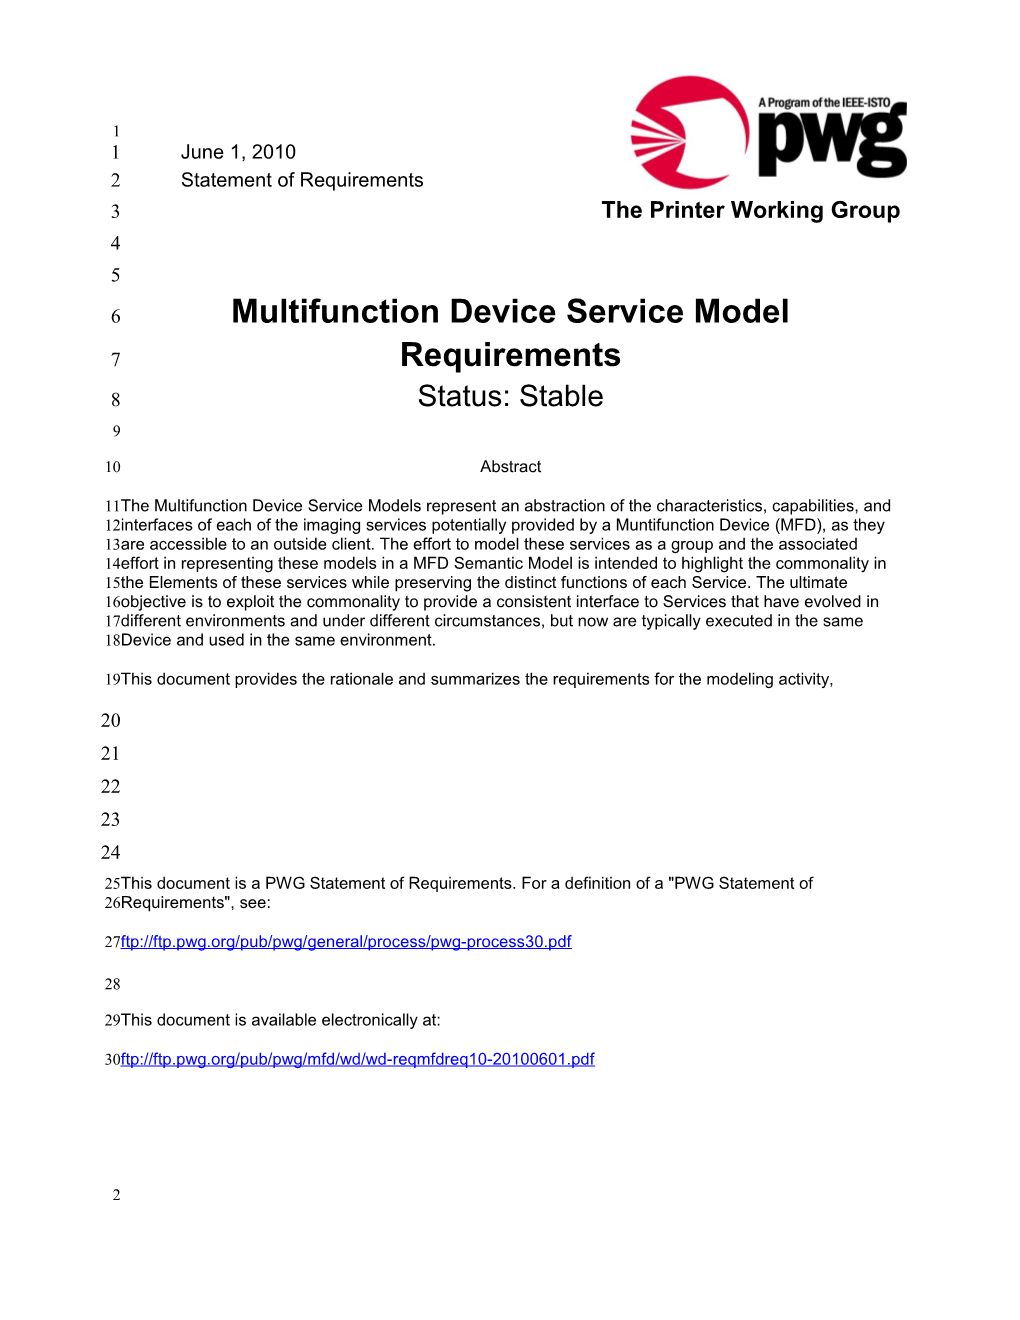 MFD Model and Overall Semantics